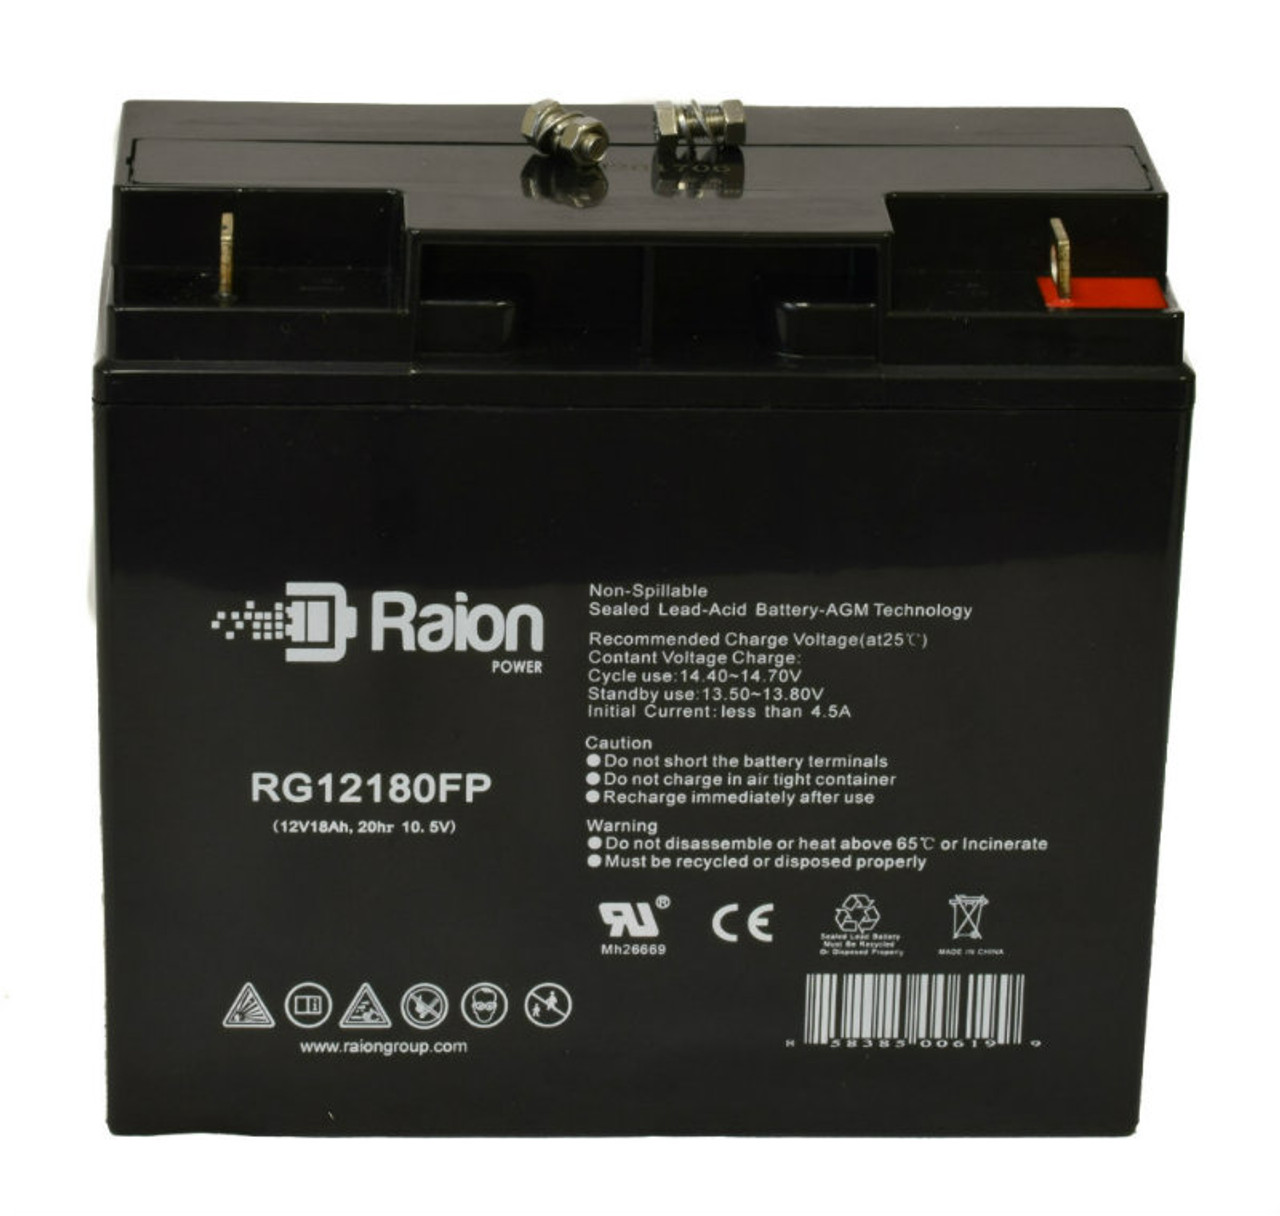 Raion Power RG12180FP 12V 18Ah Lead Acid Battery for Europower EV 22-12